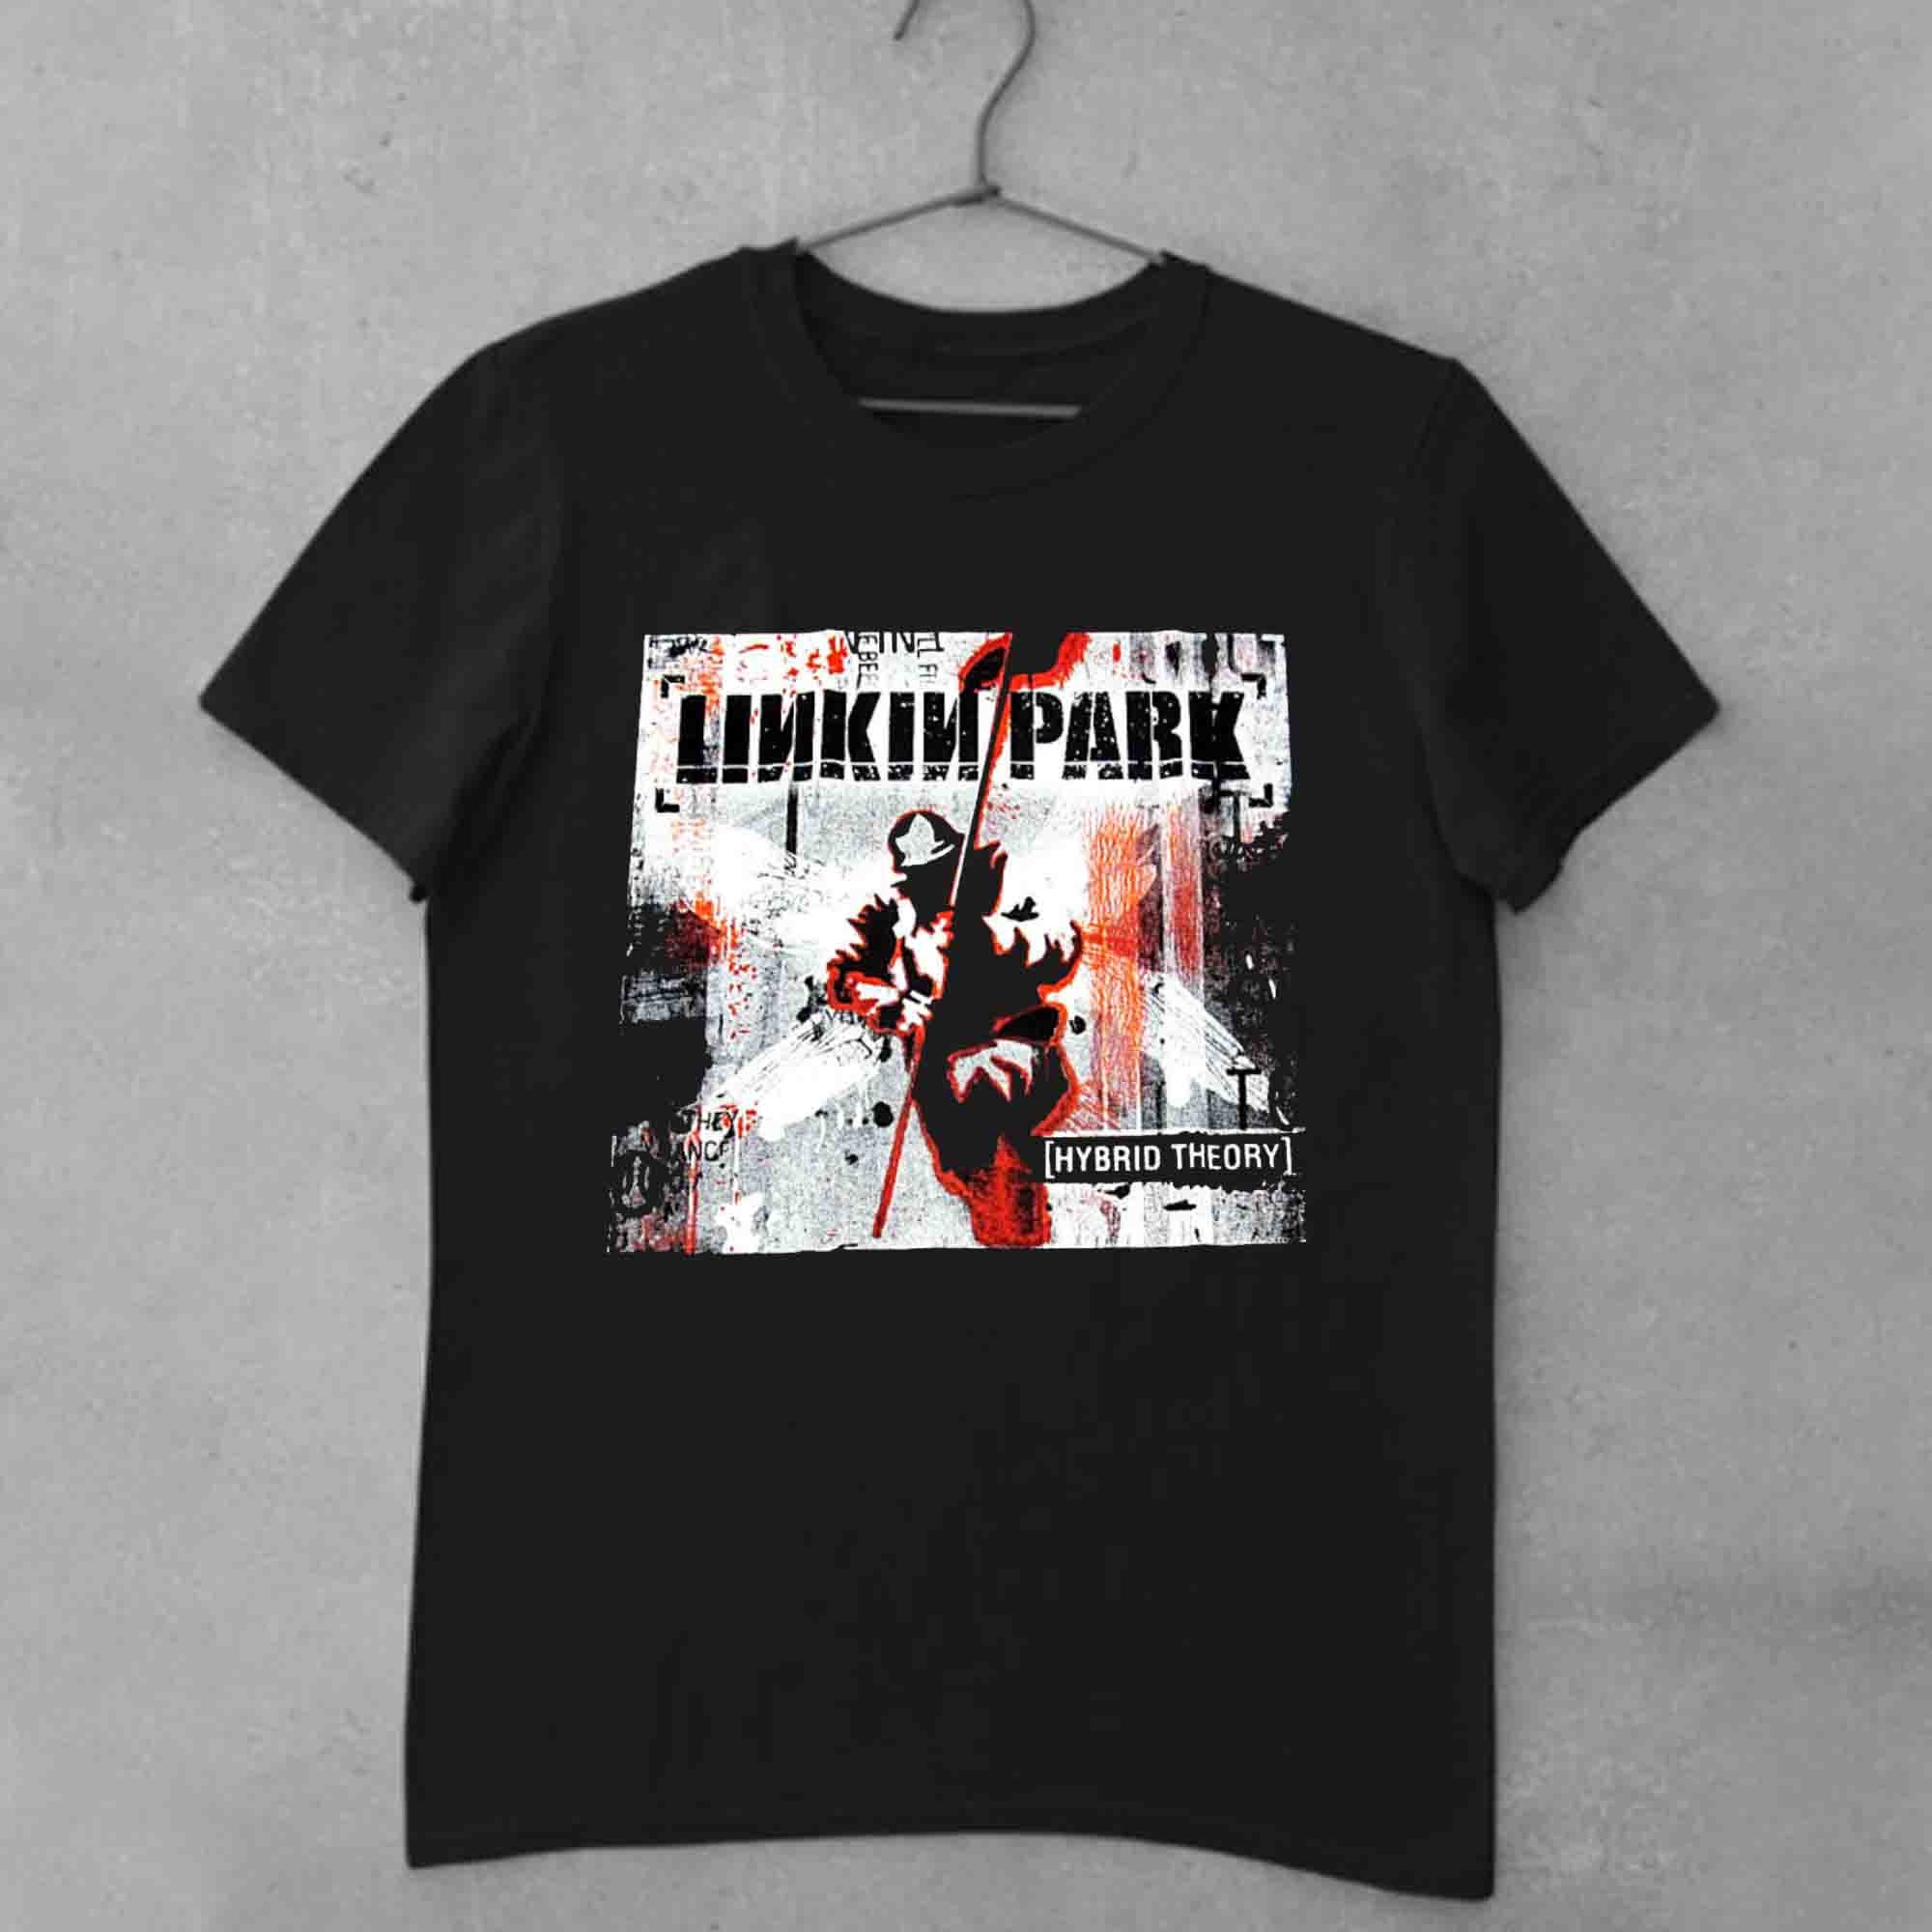 LINKIN PARK Hybrid Theory T-shirt Adult Men's Black Tee New